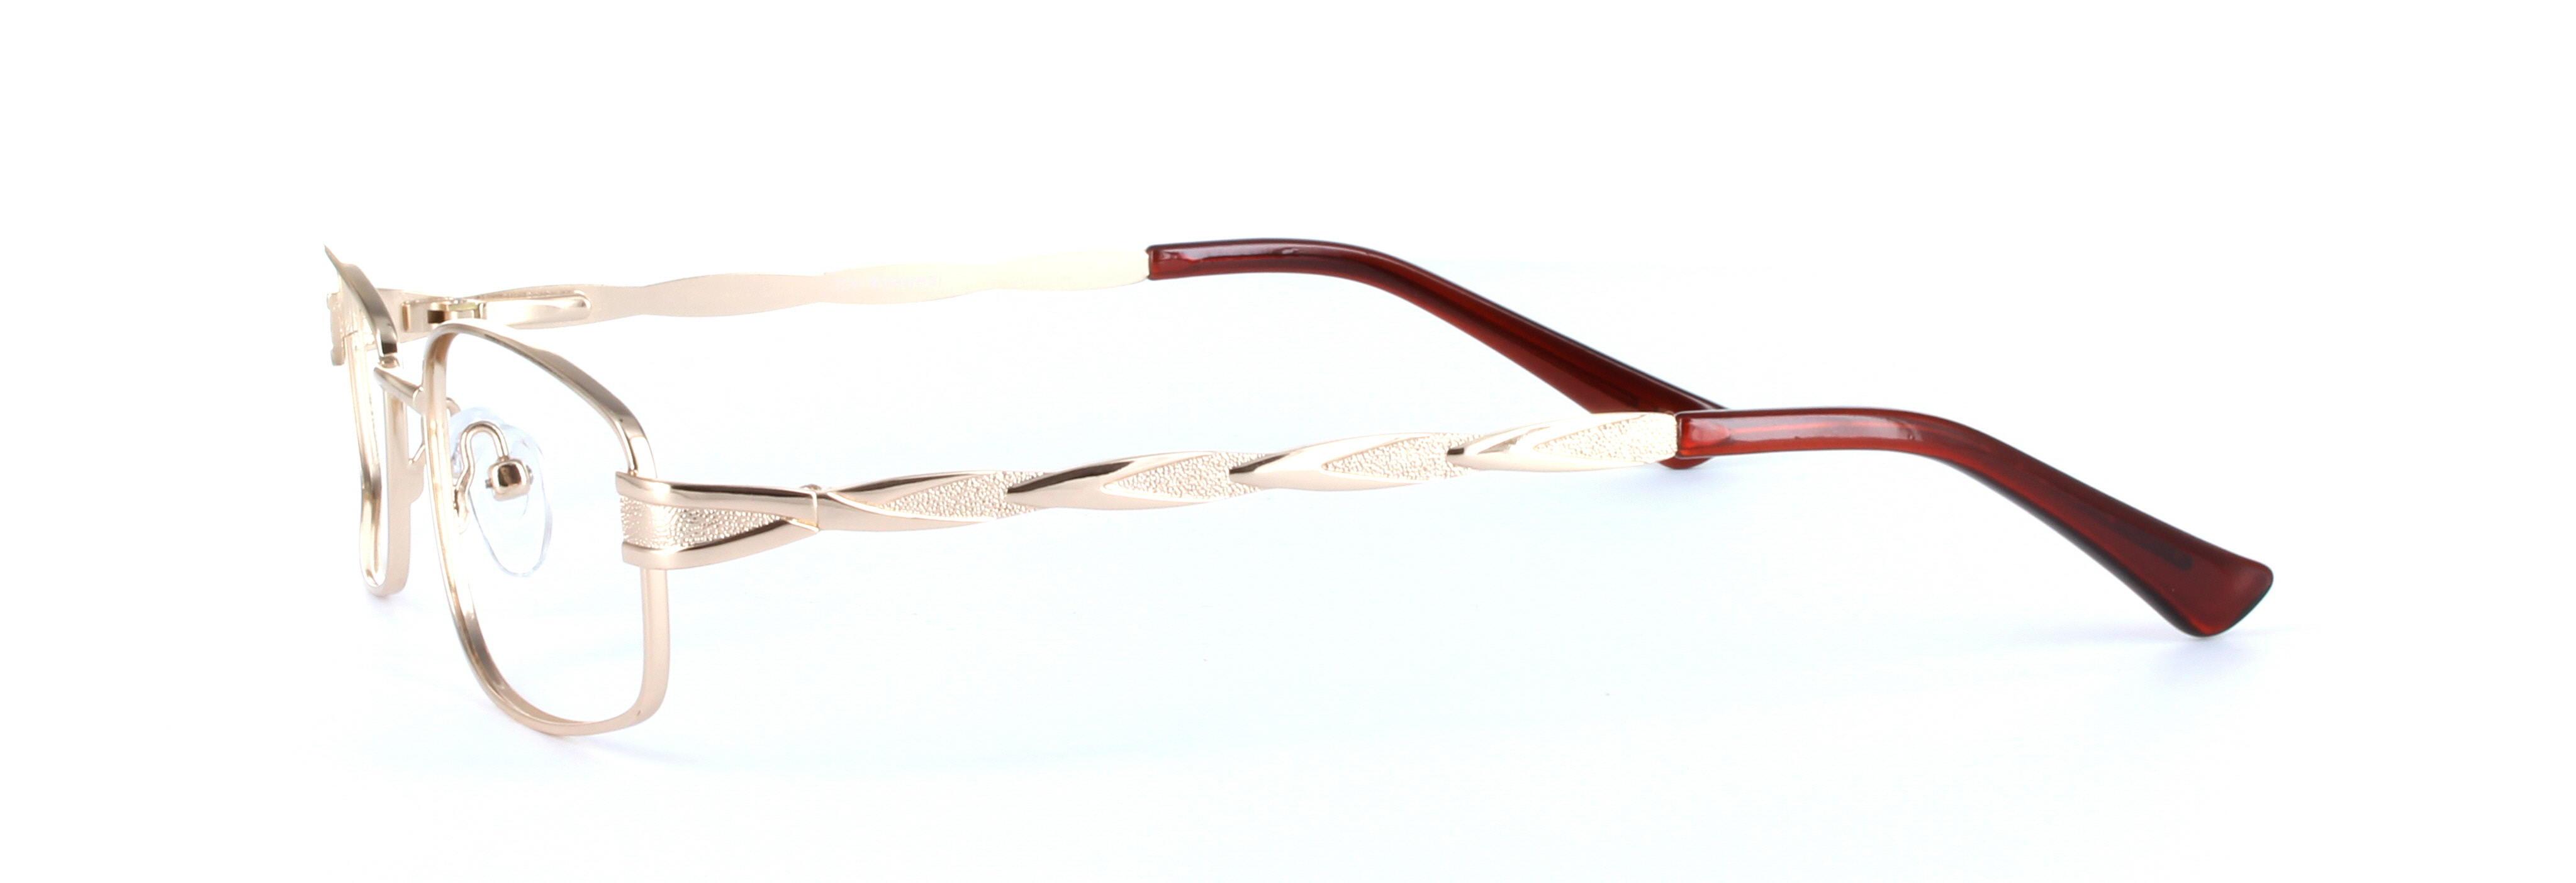 Anna Gold Full Rim Oval Rectangular Metal Glasses - Image View 2